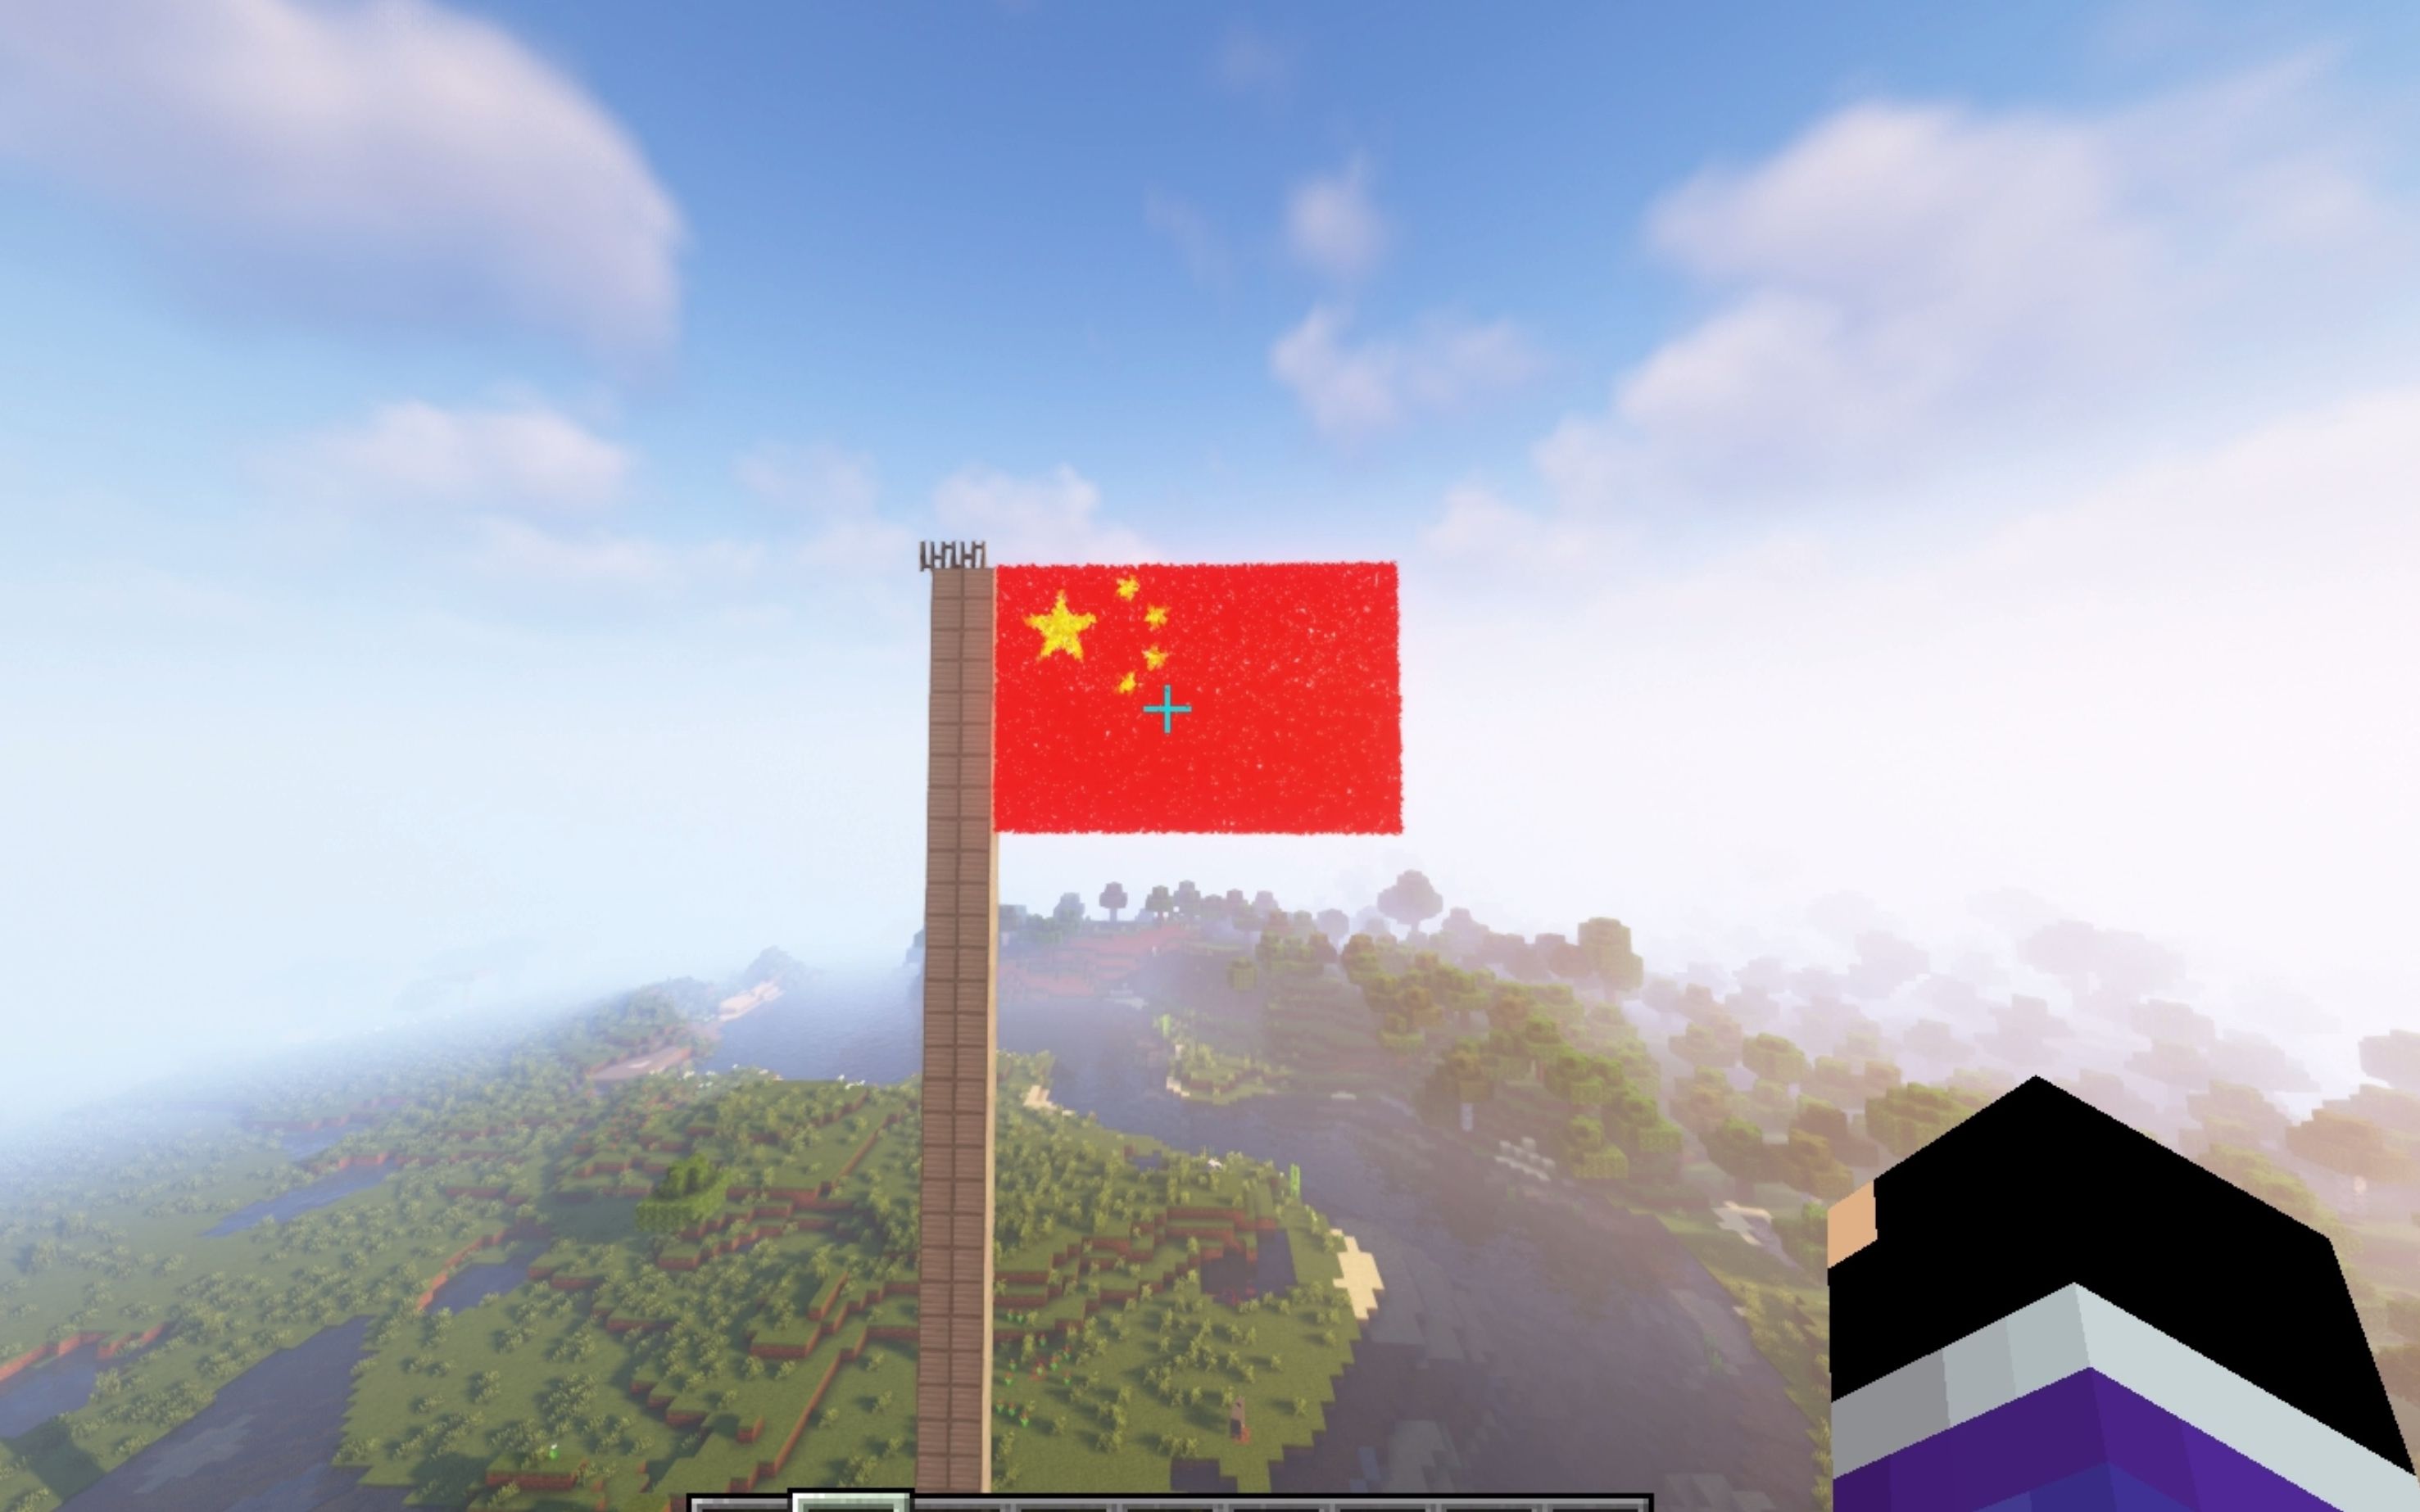 [minecraft] 在游戏里还原升国旗场面,祝愿祖国愈加繁荣昌盛!